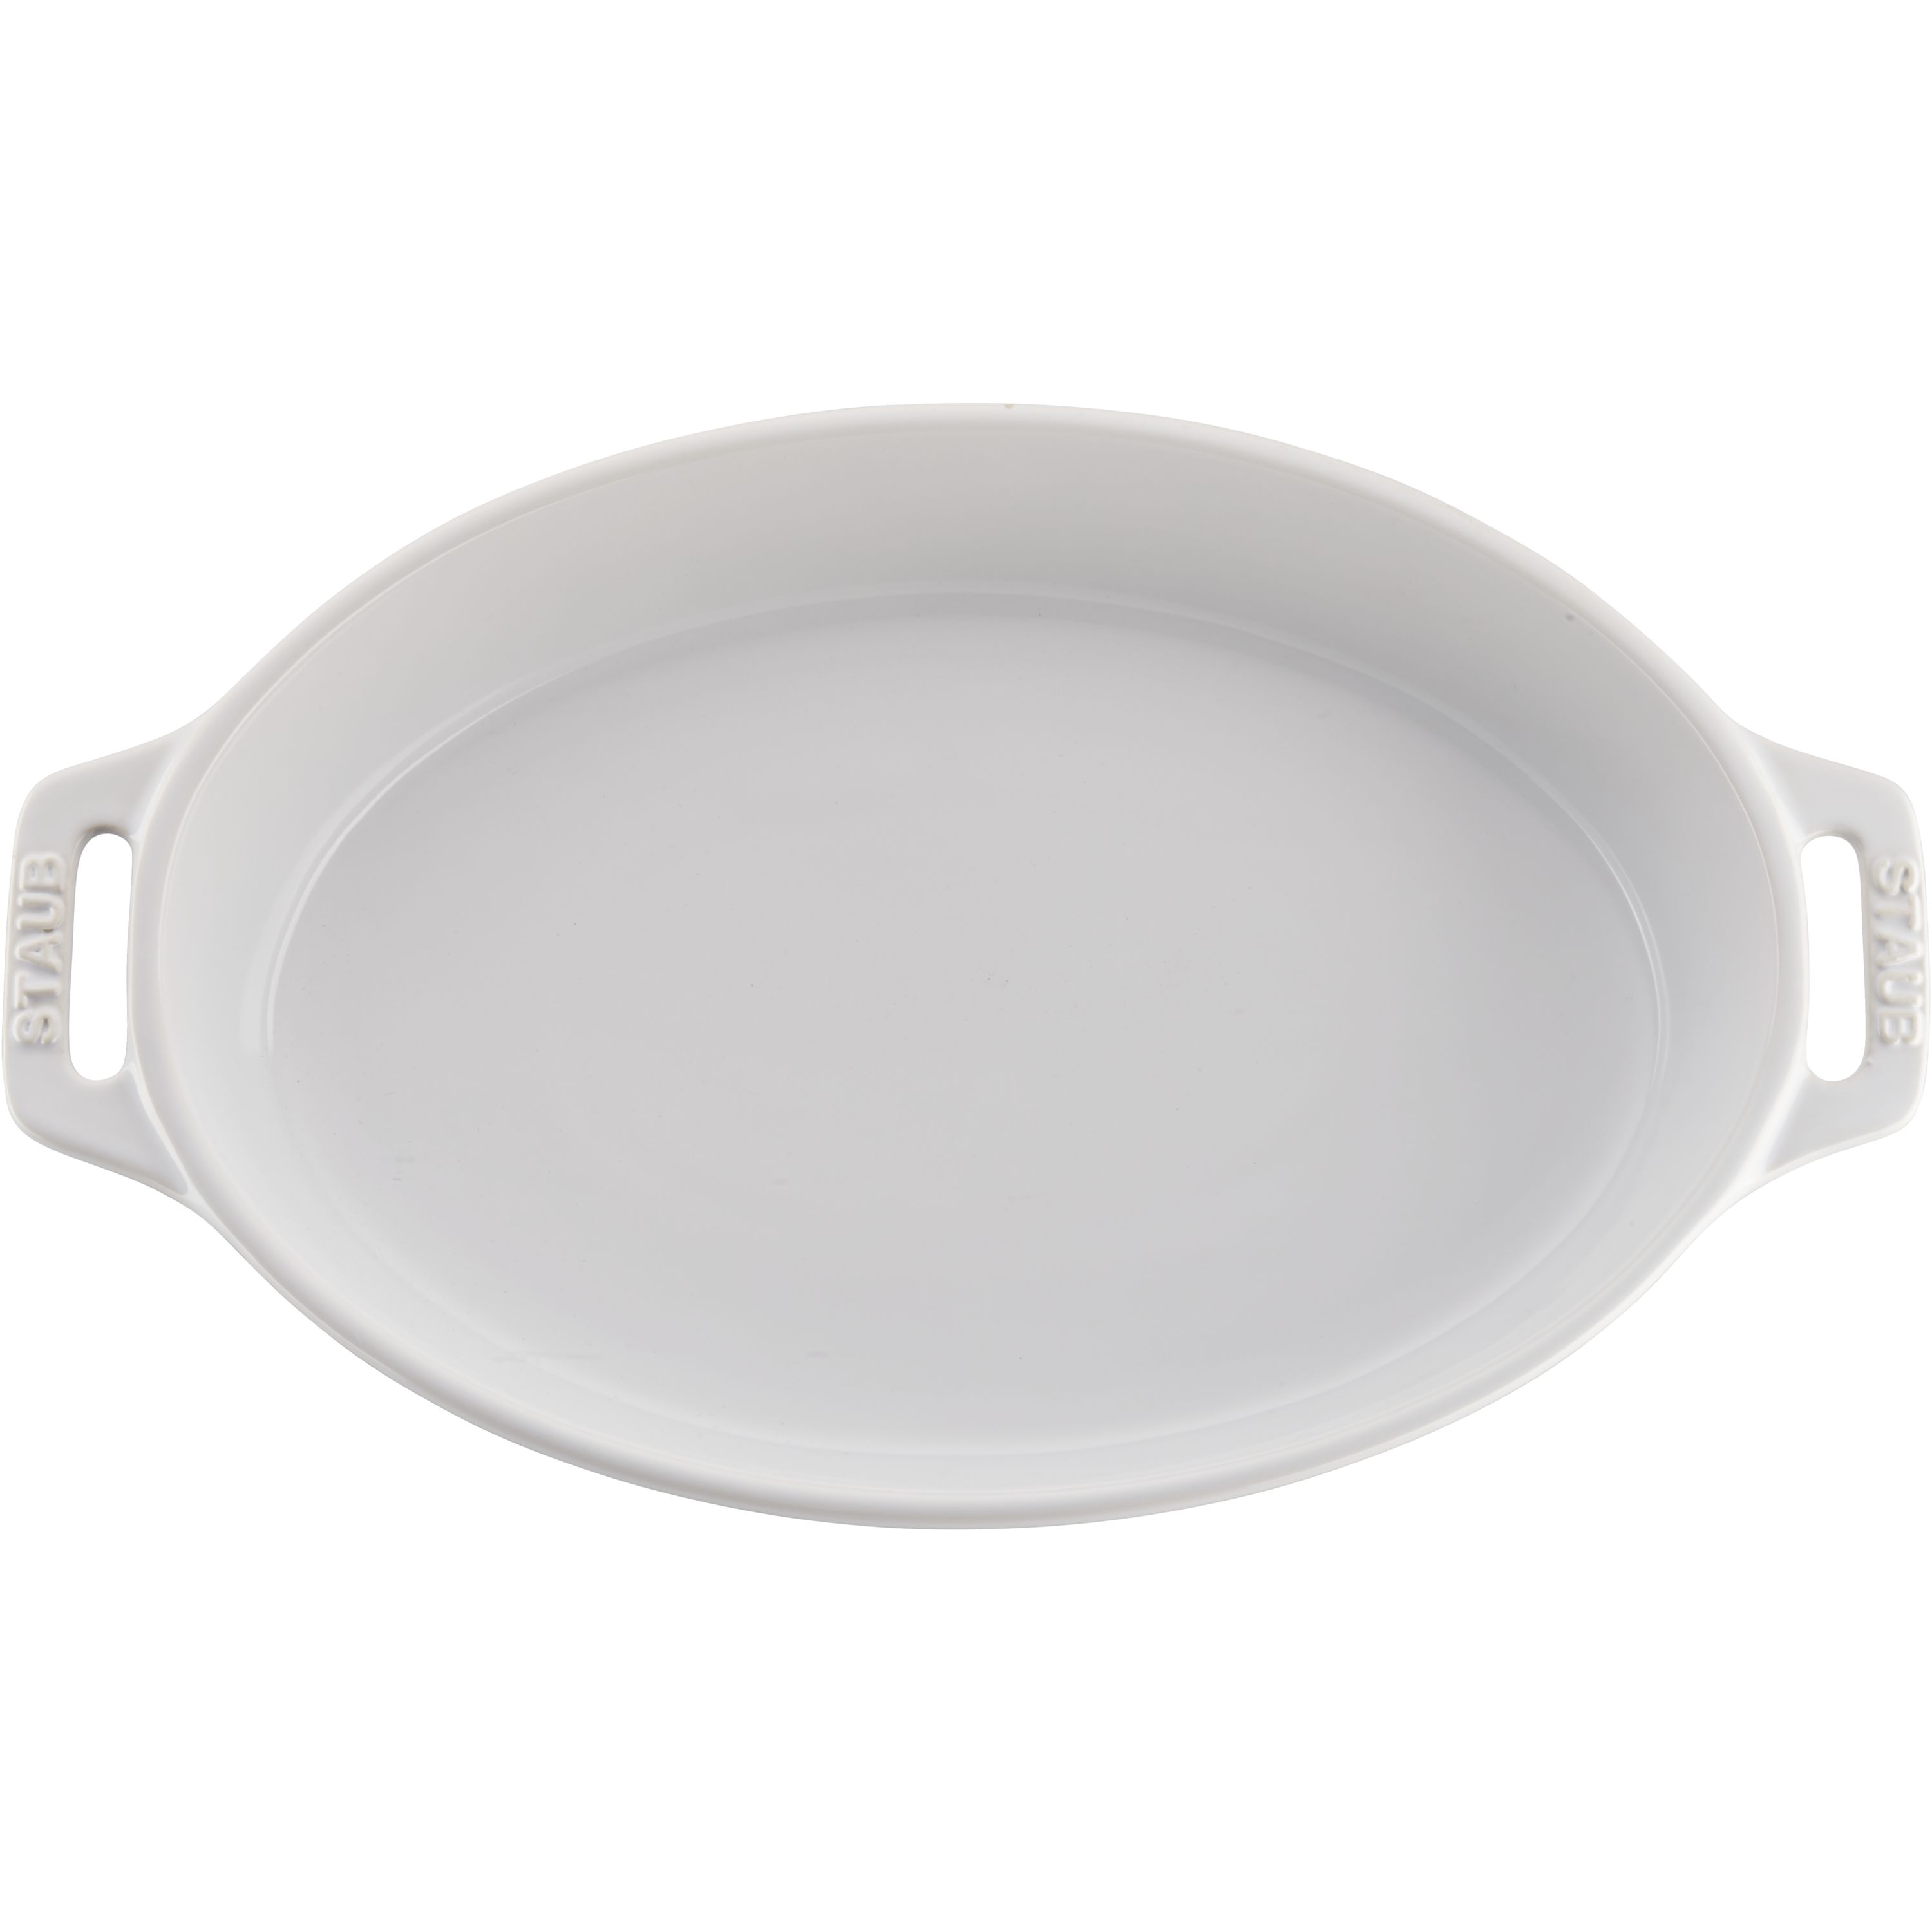 Staub 2-Piece Ceramic Nesting Oval Baking Dishes Set, White on Food52